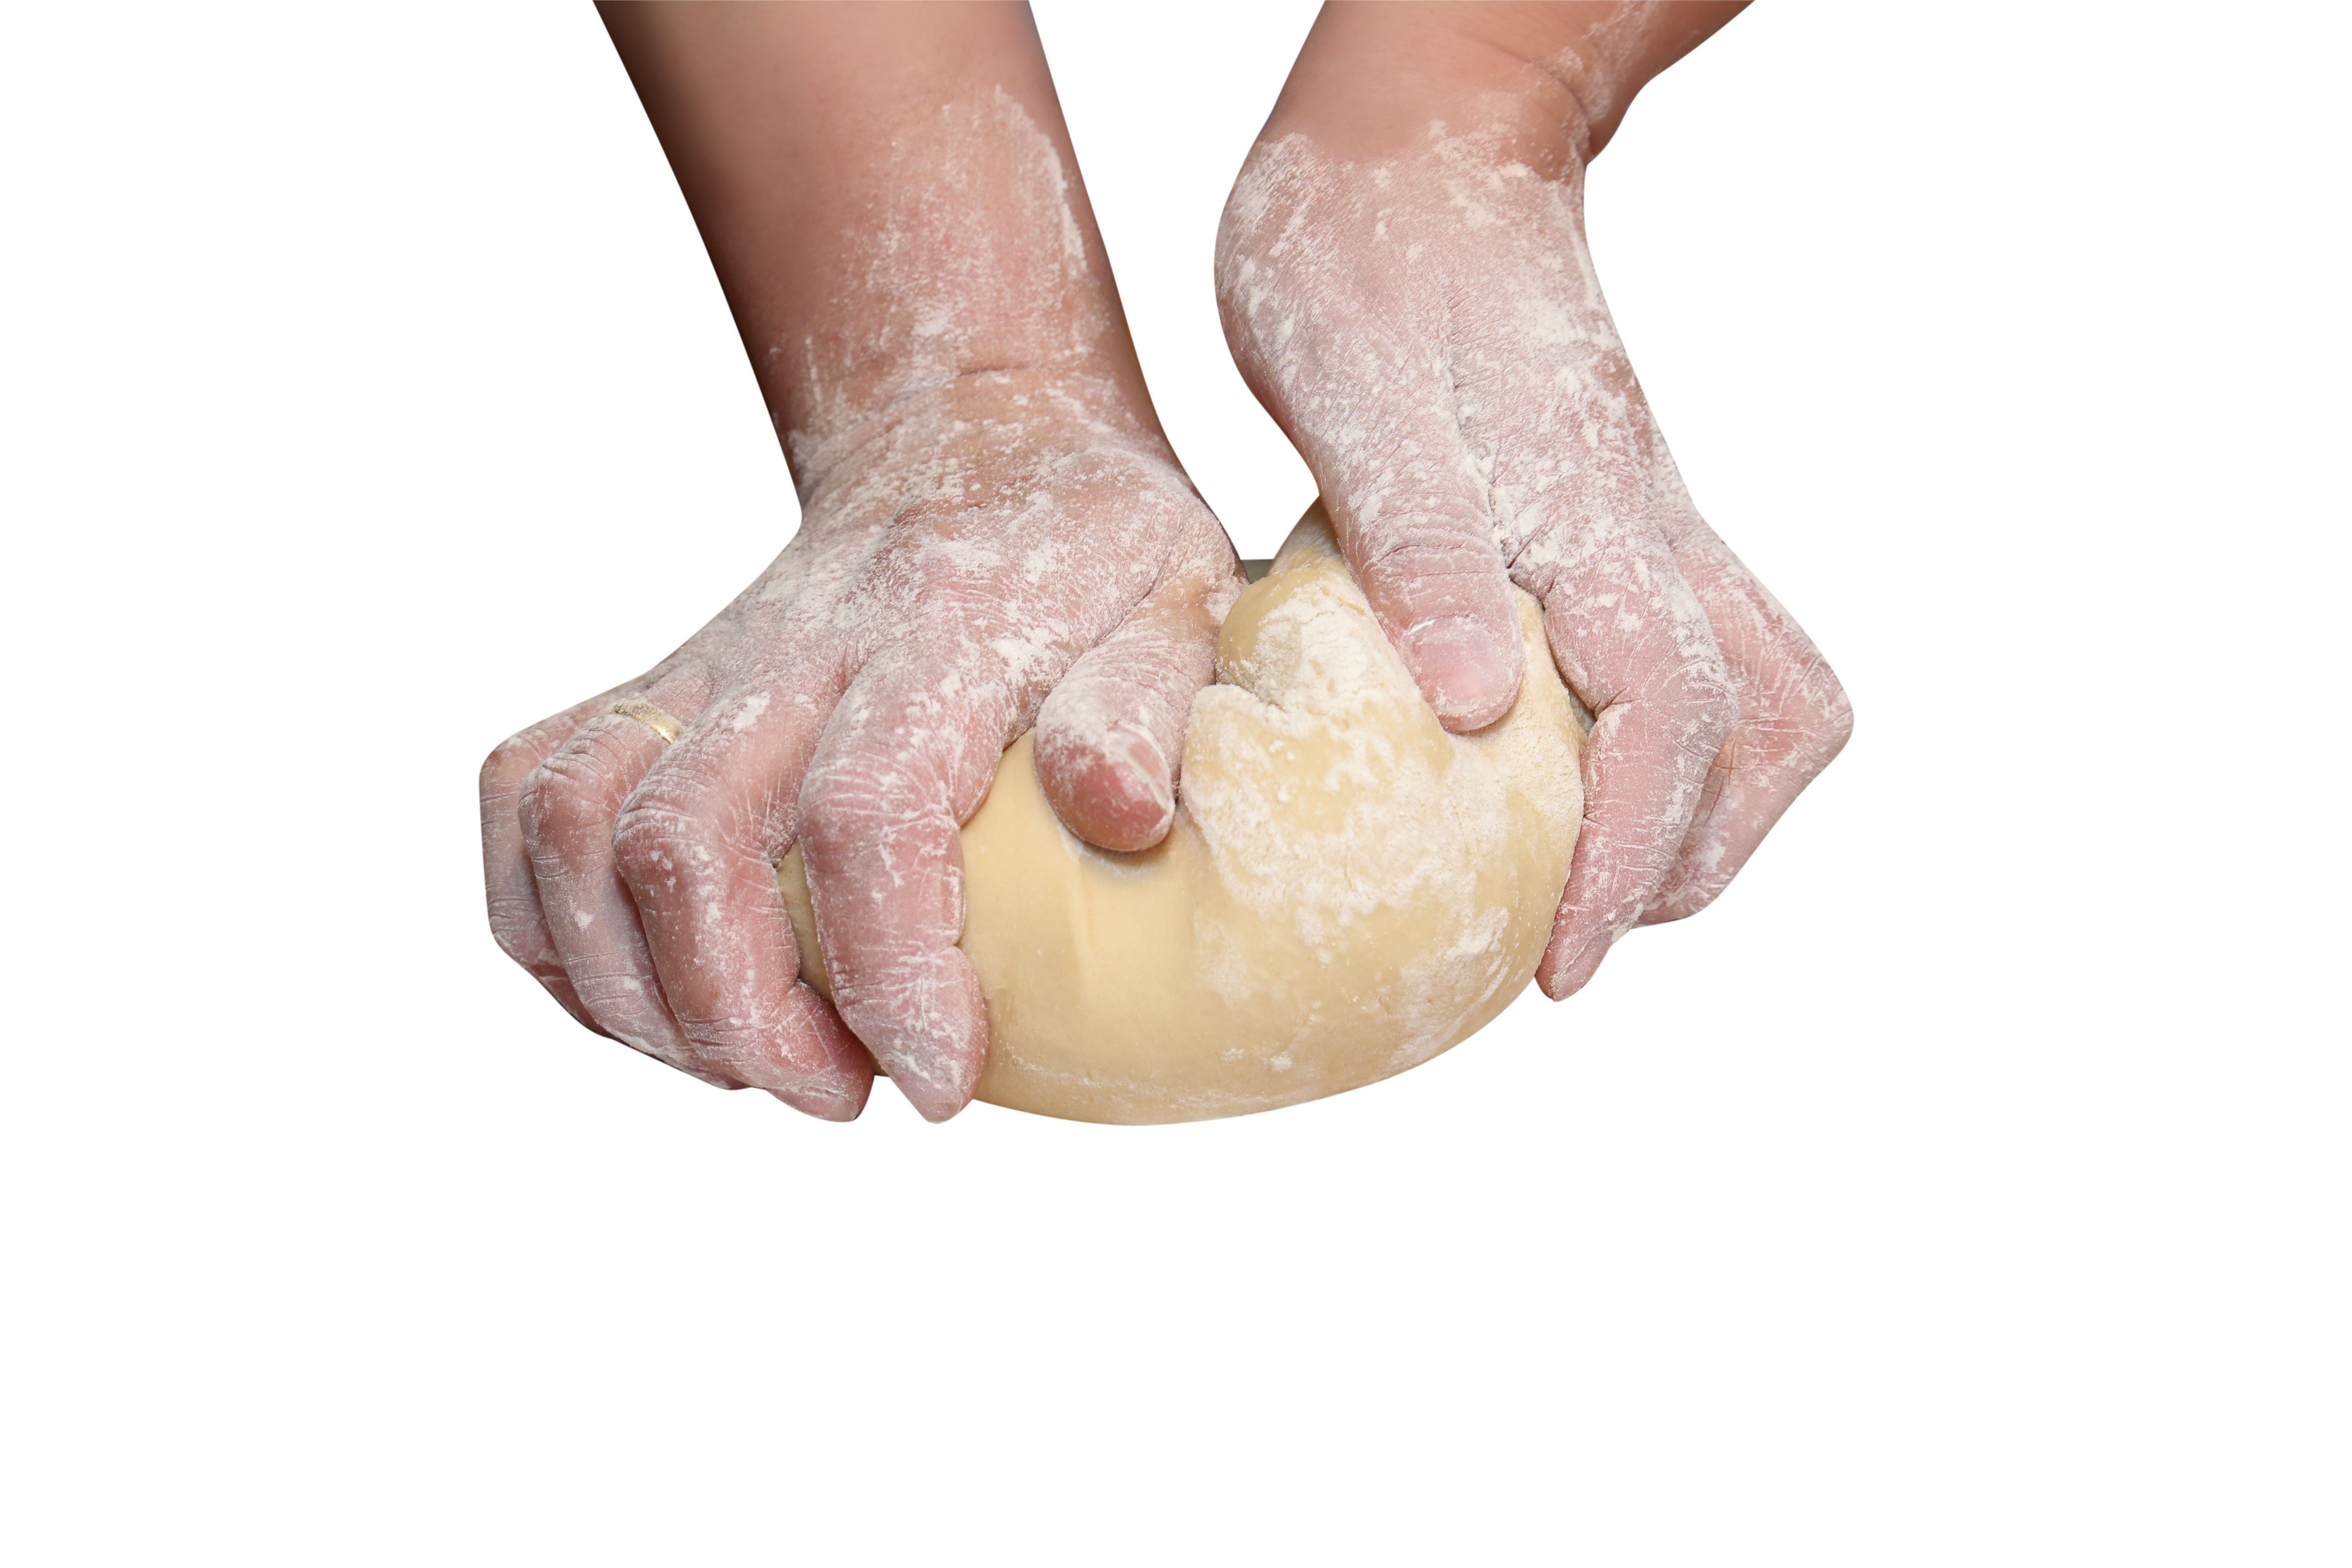 Hands Kneading Flour